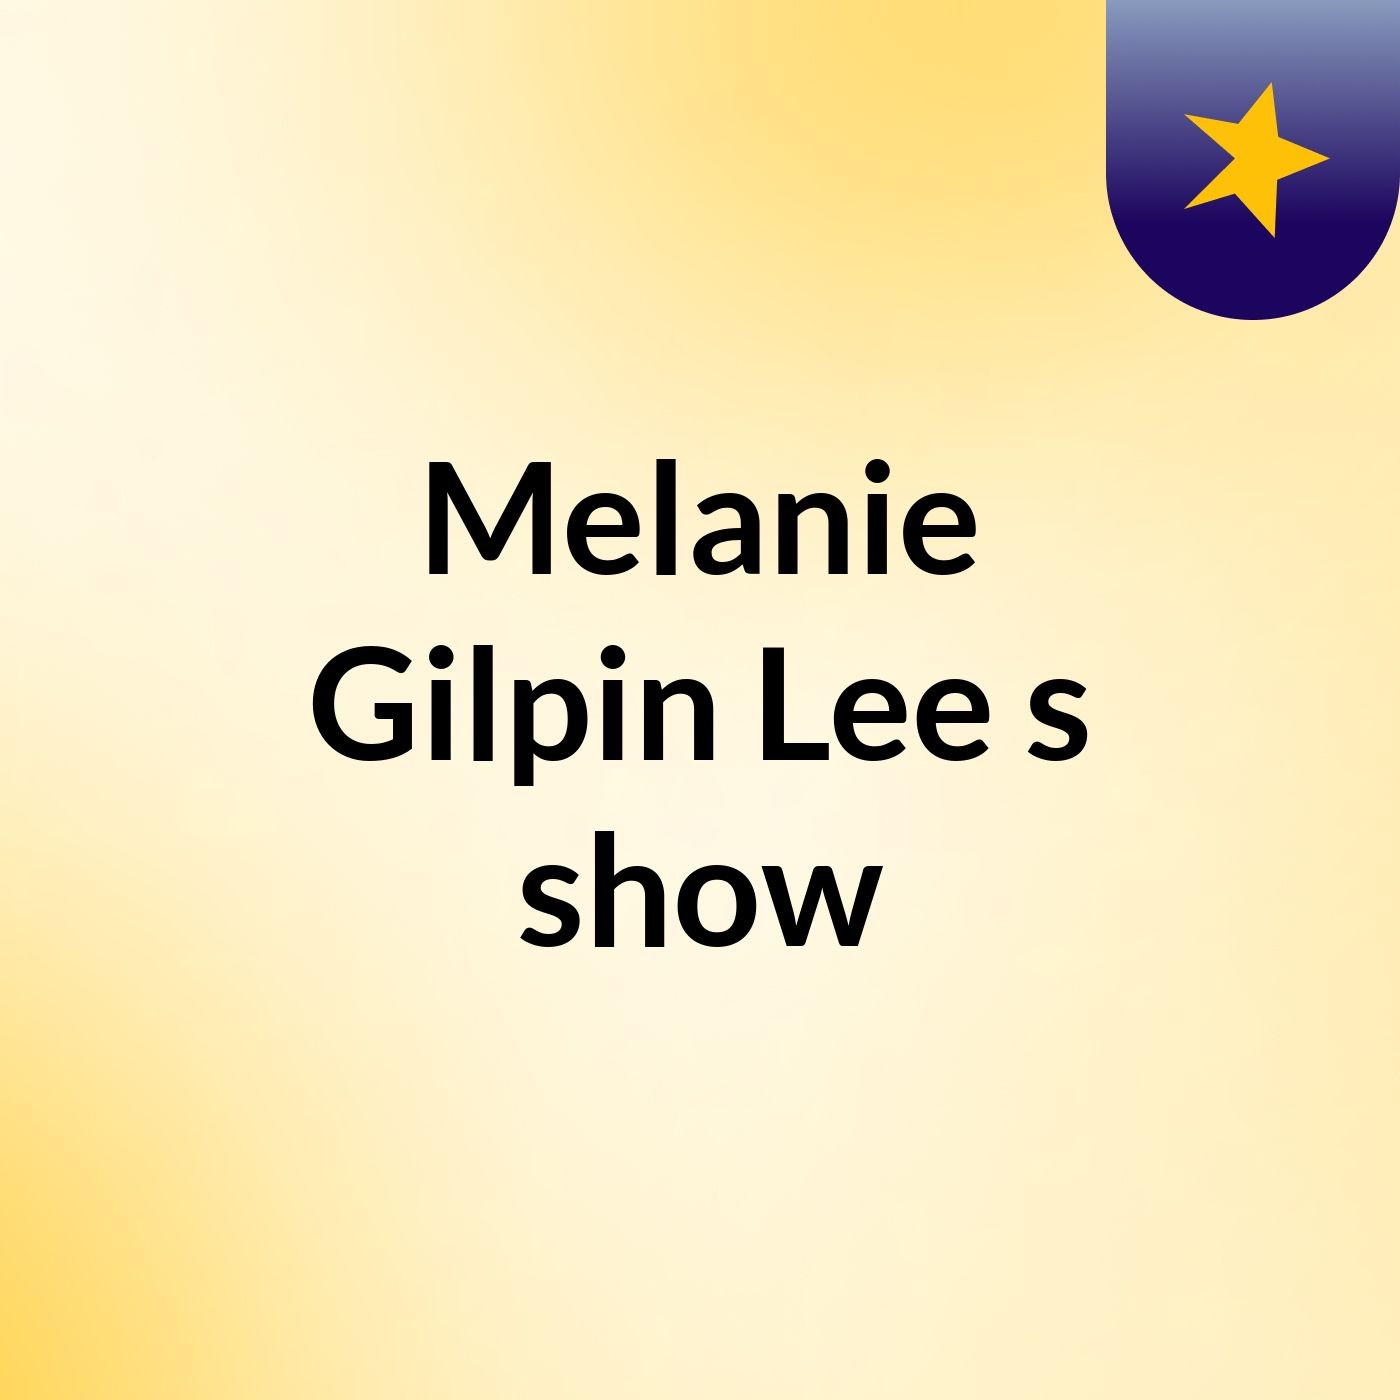 Melanie Gilpin Lee's show